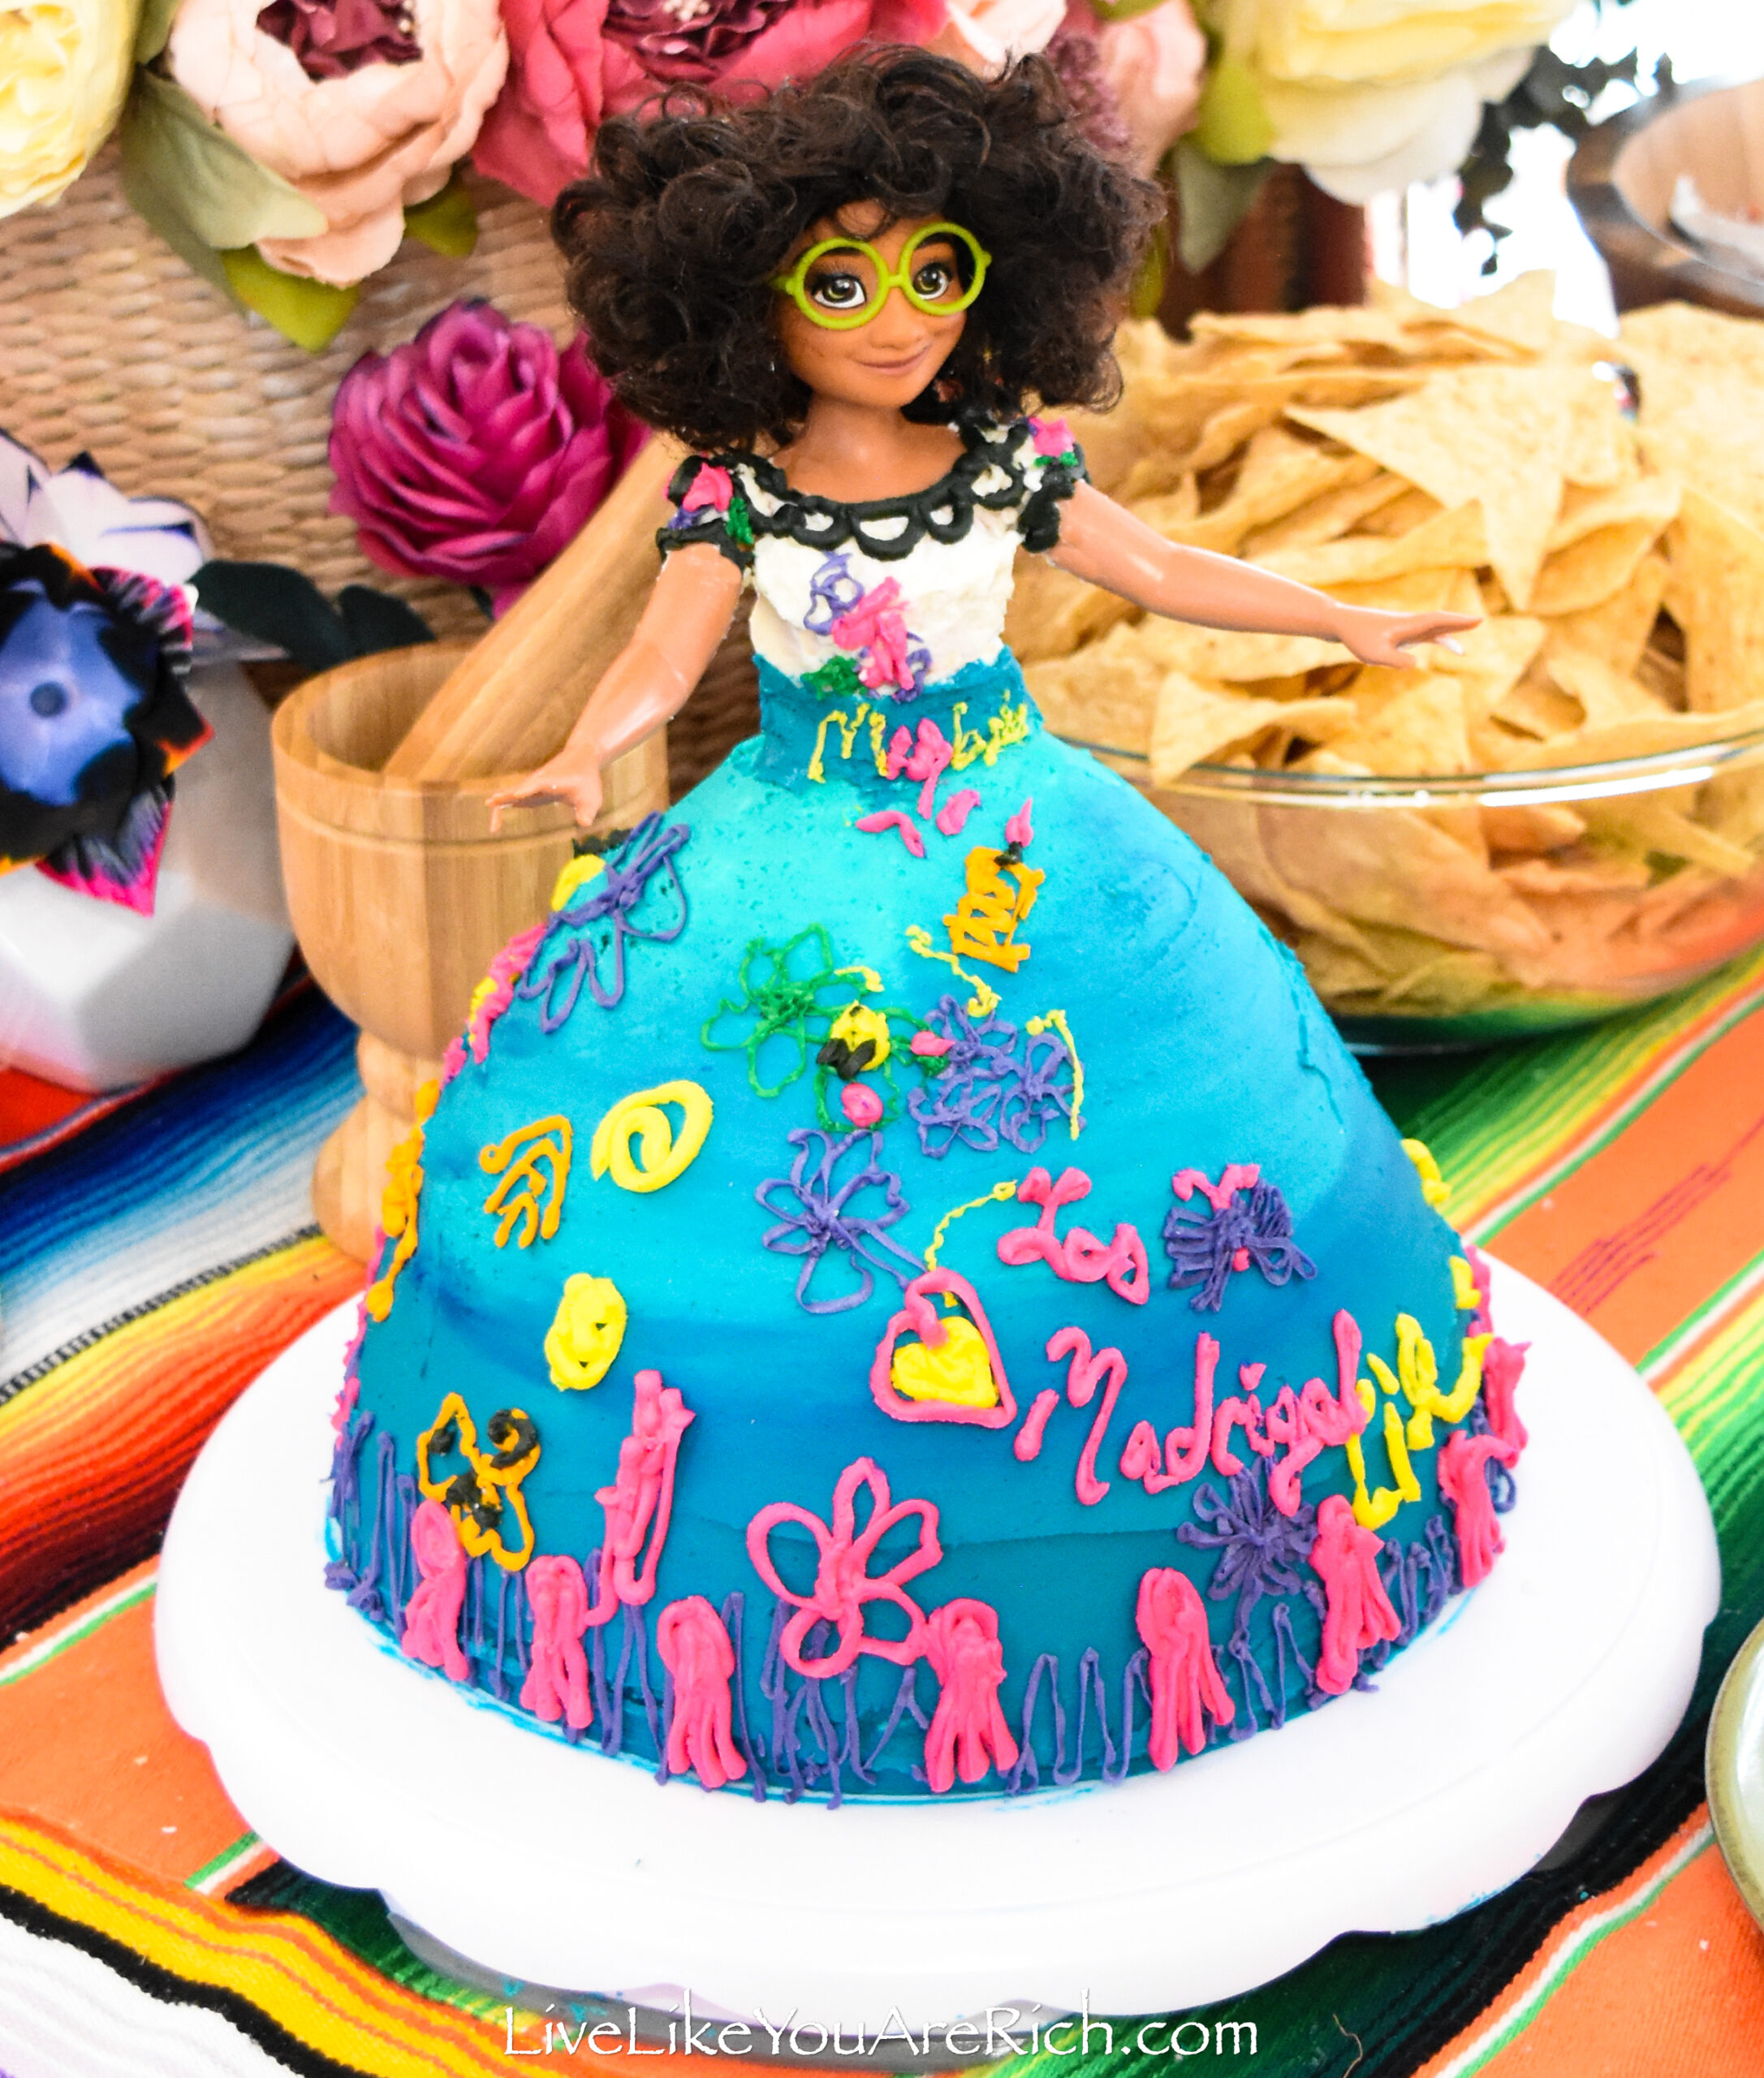 Encanto birthday party activities cake